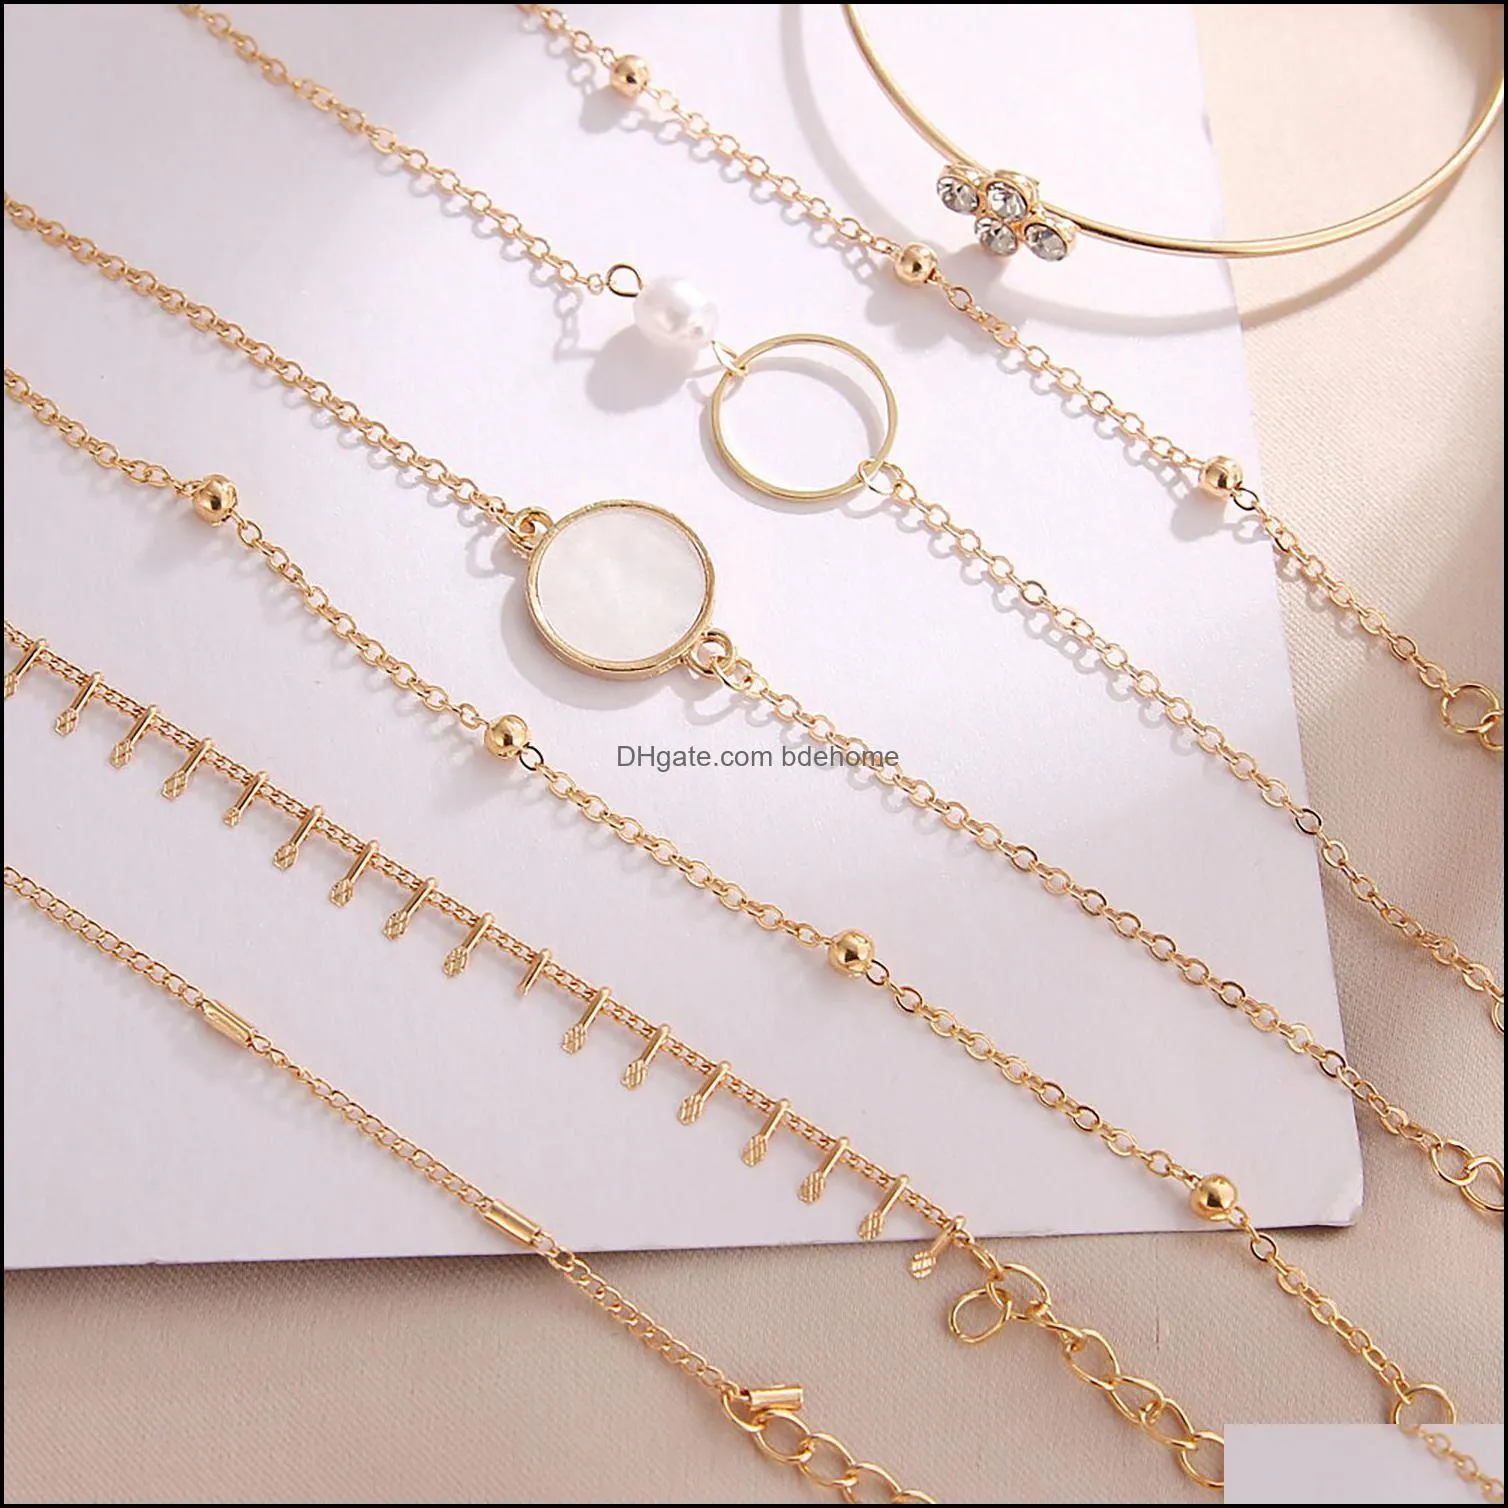 6pcs fashion crystal bracelets sets for women gold charms hand chain stackable wrap bangle adjustable bracelet jewelry